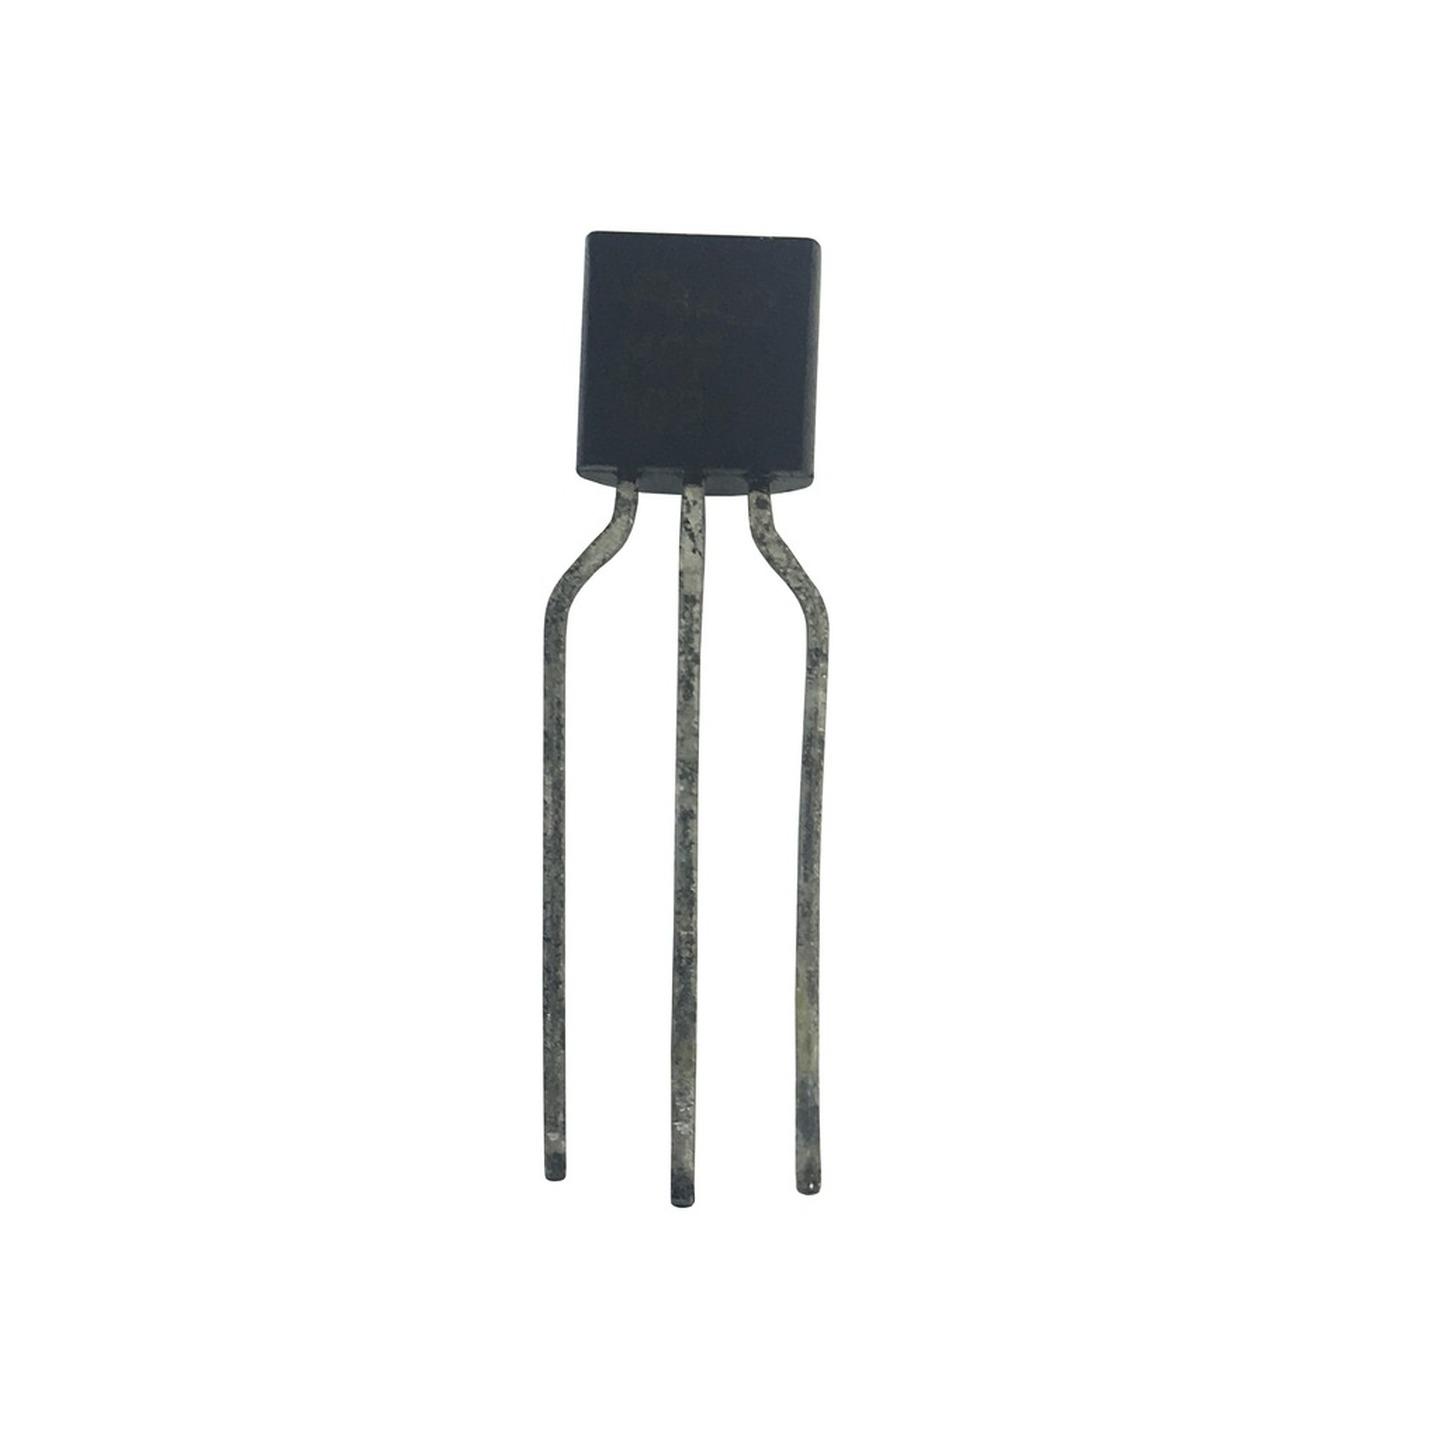 BC548 NPN Transistor